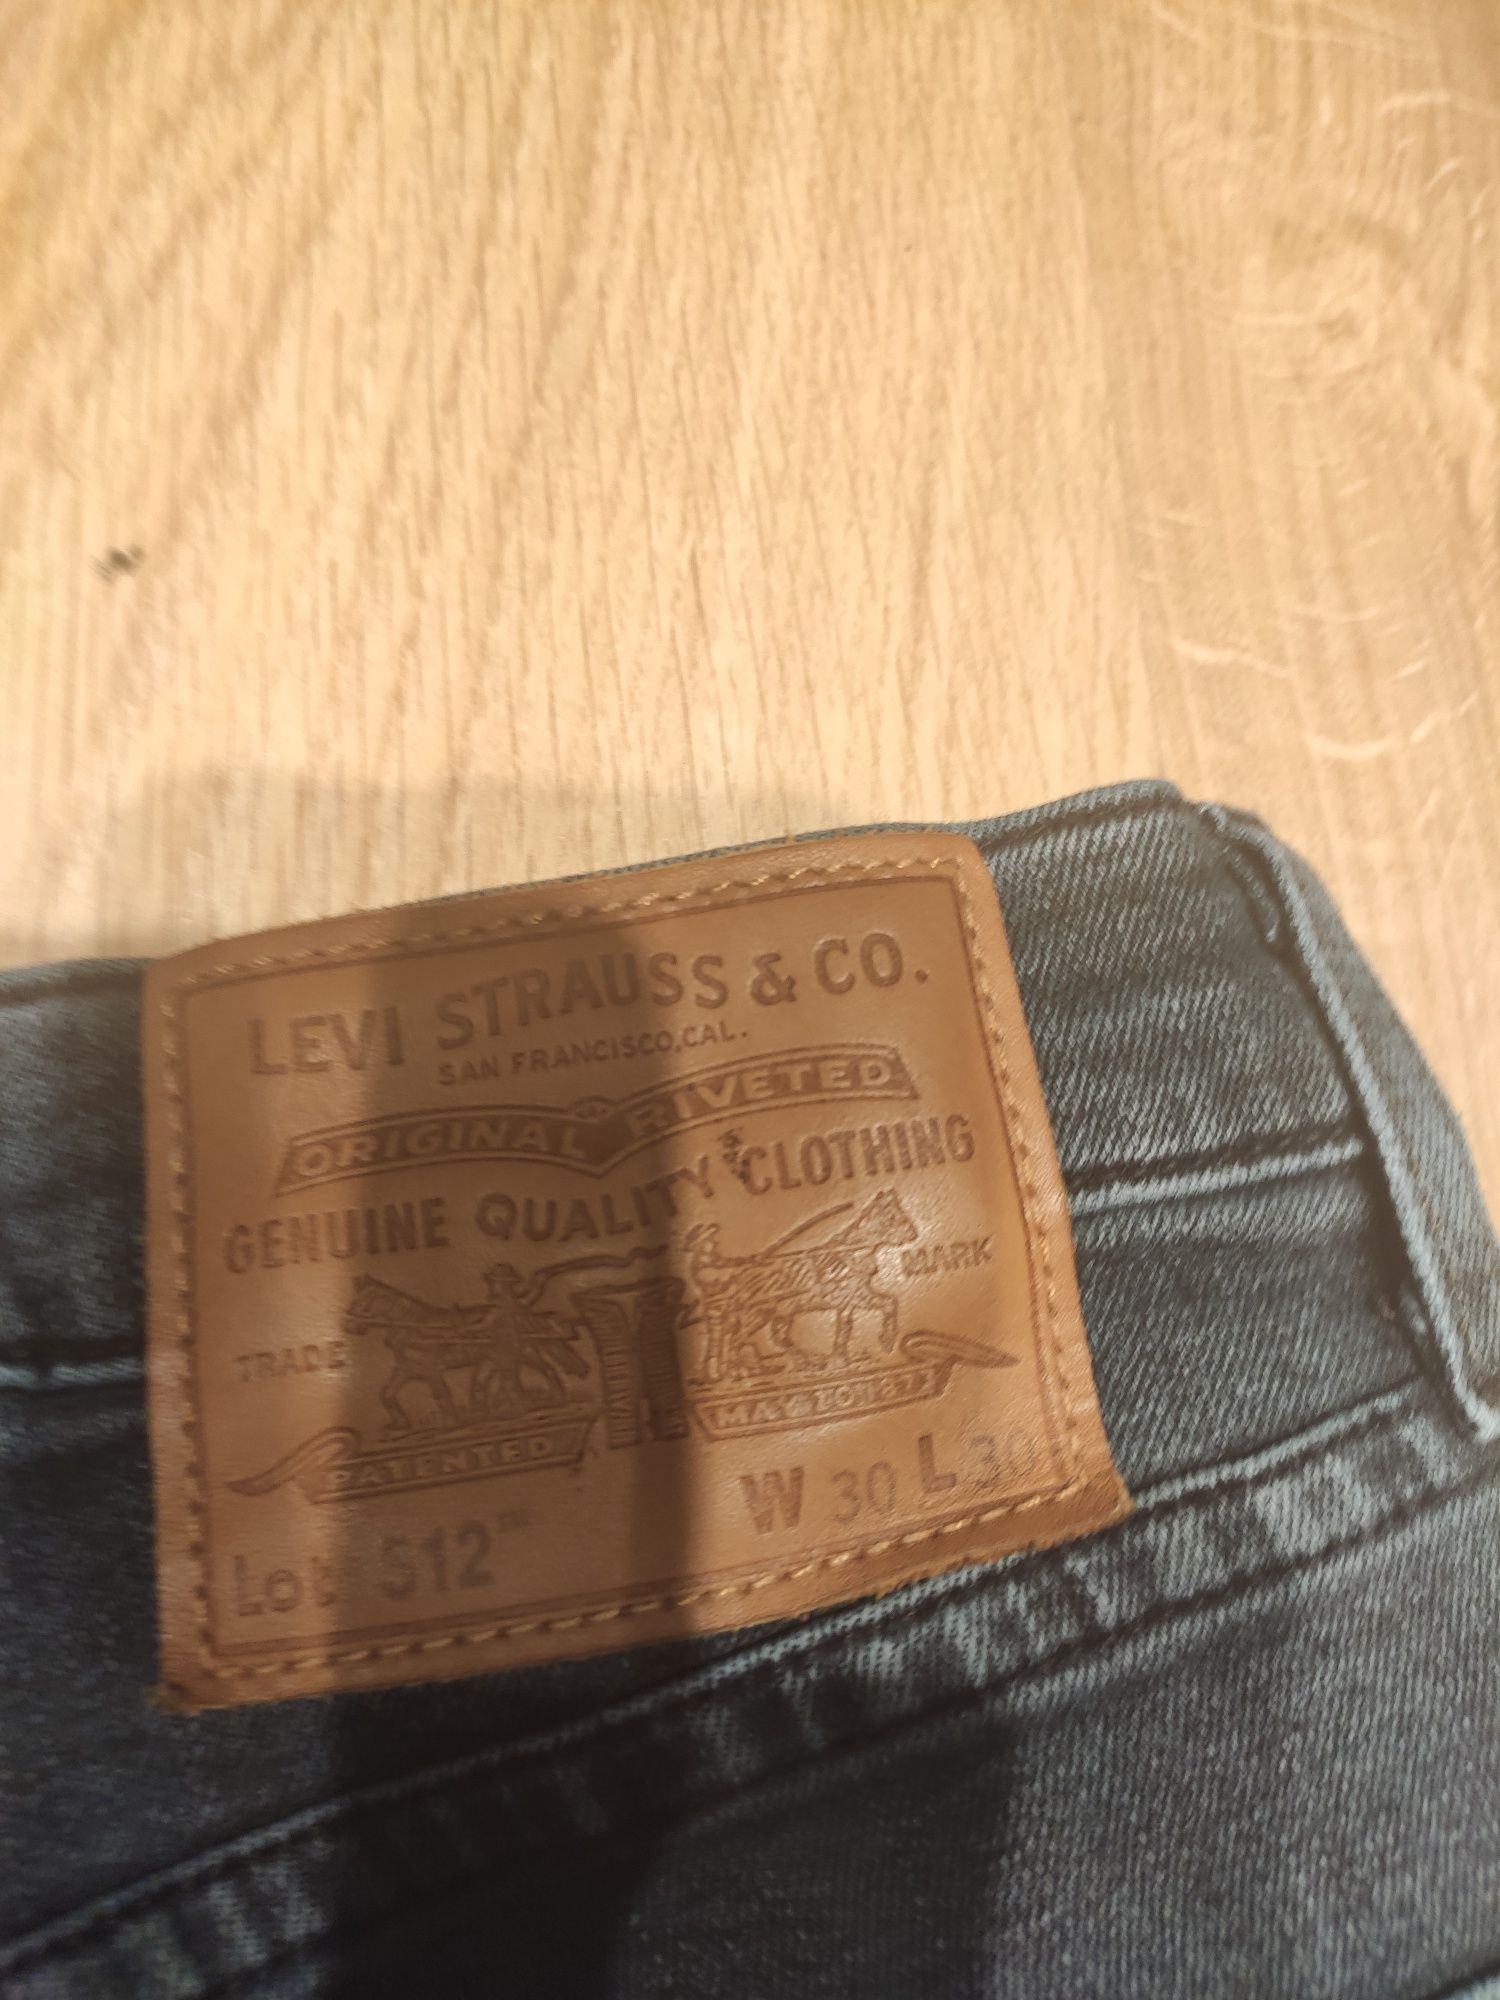 Levis Strauss Premium Jeans rozm. 30/30 Nowe.